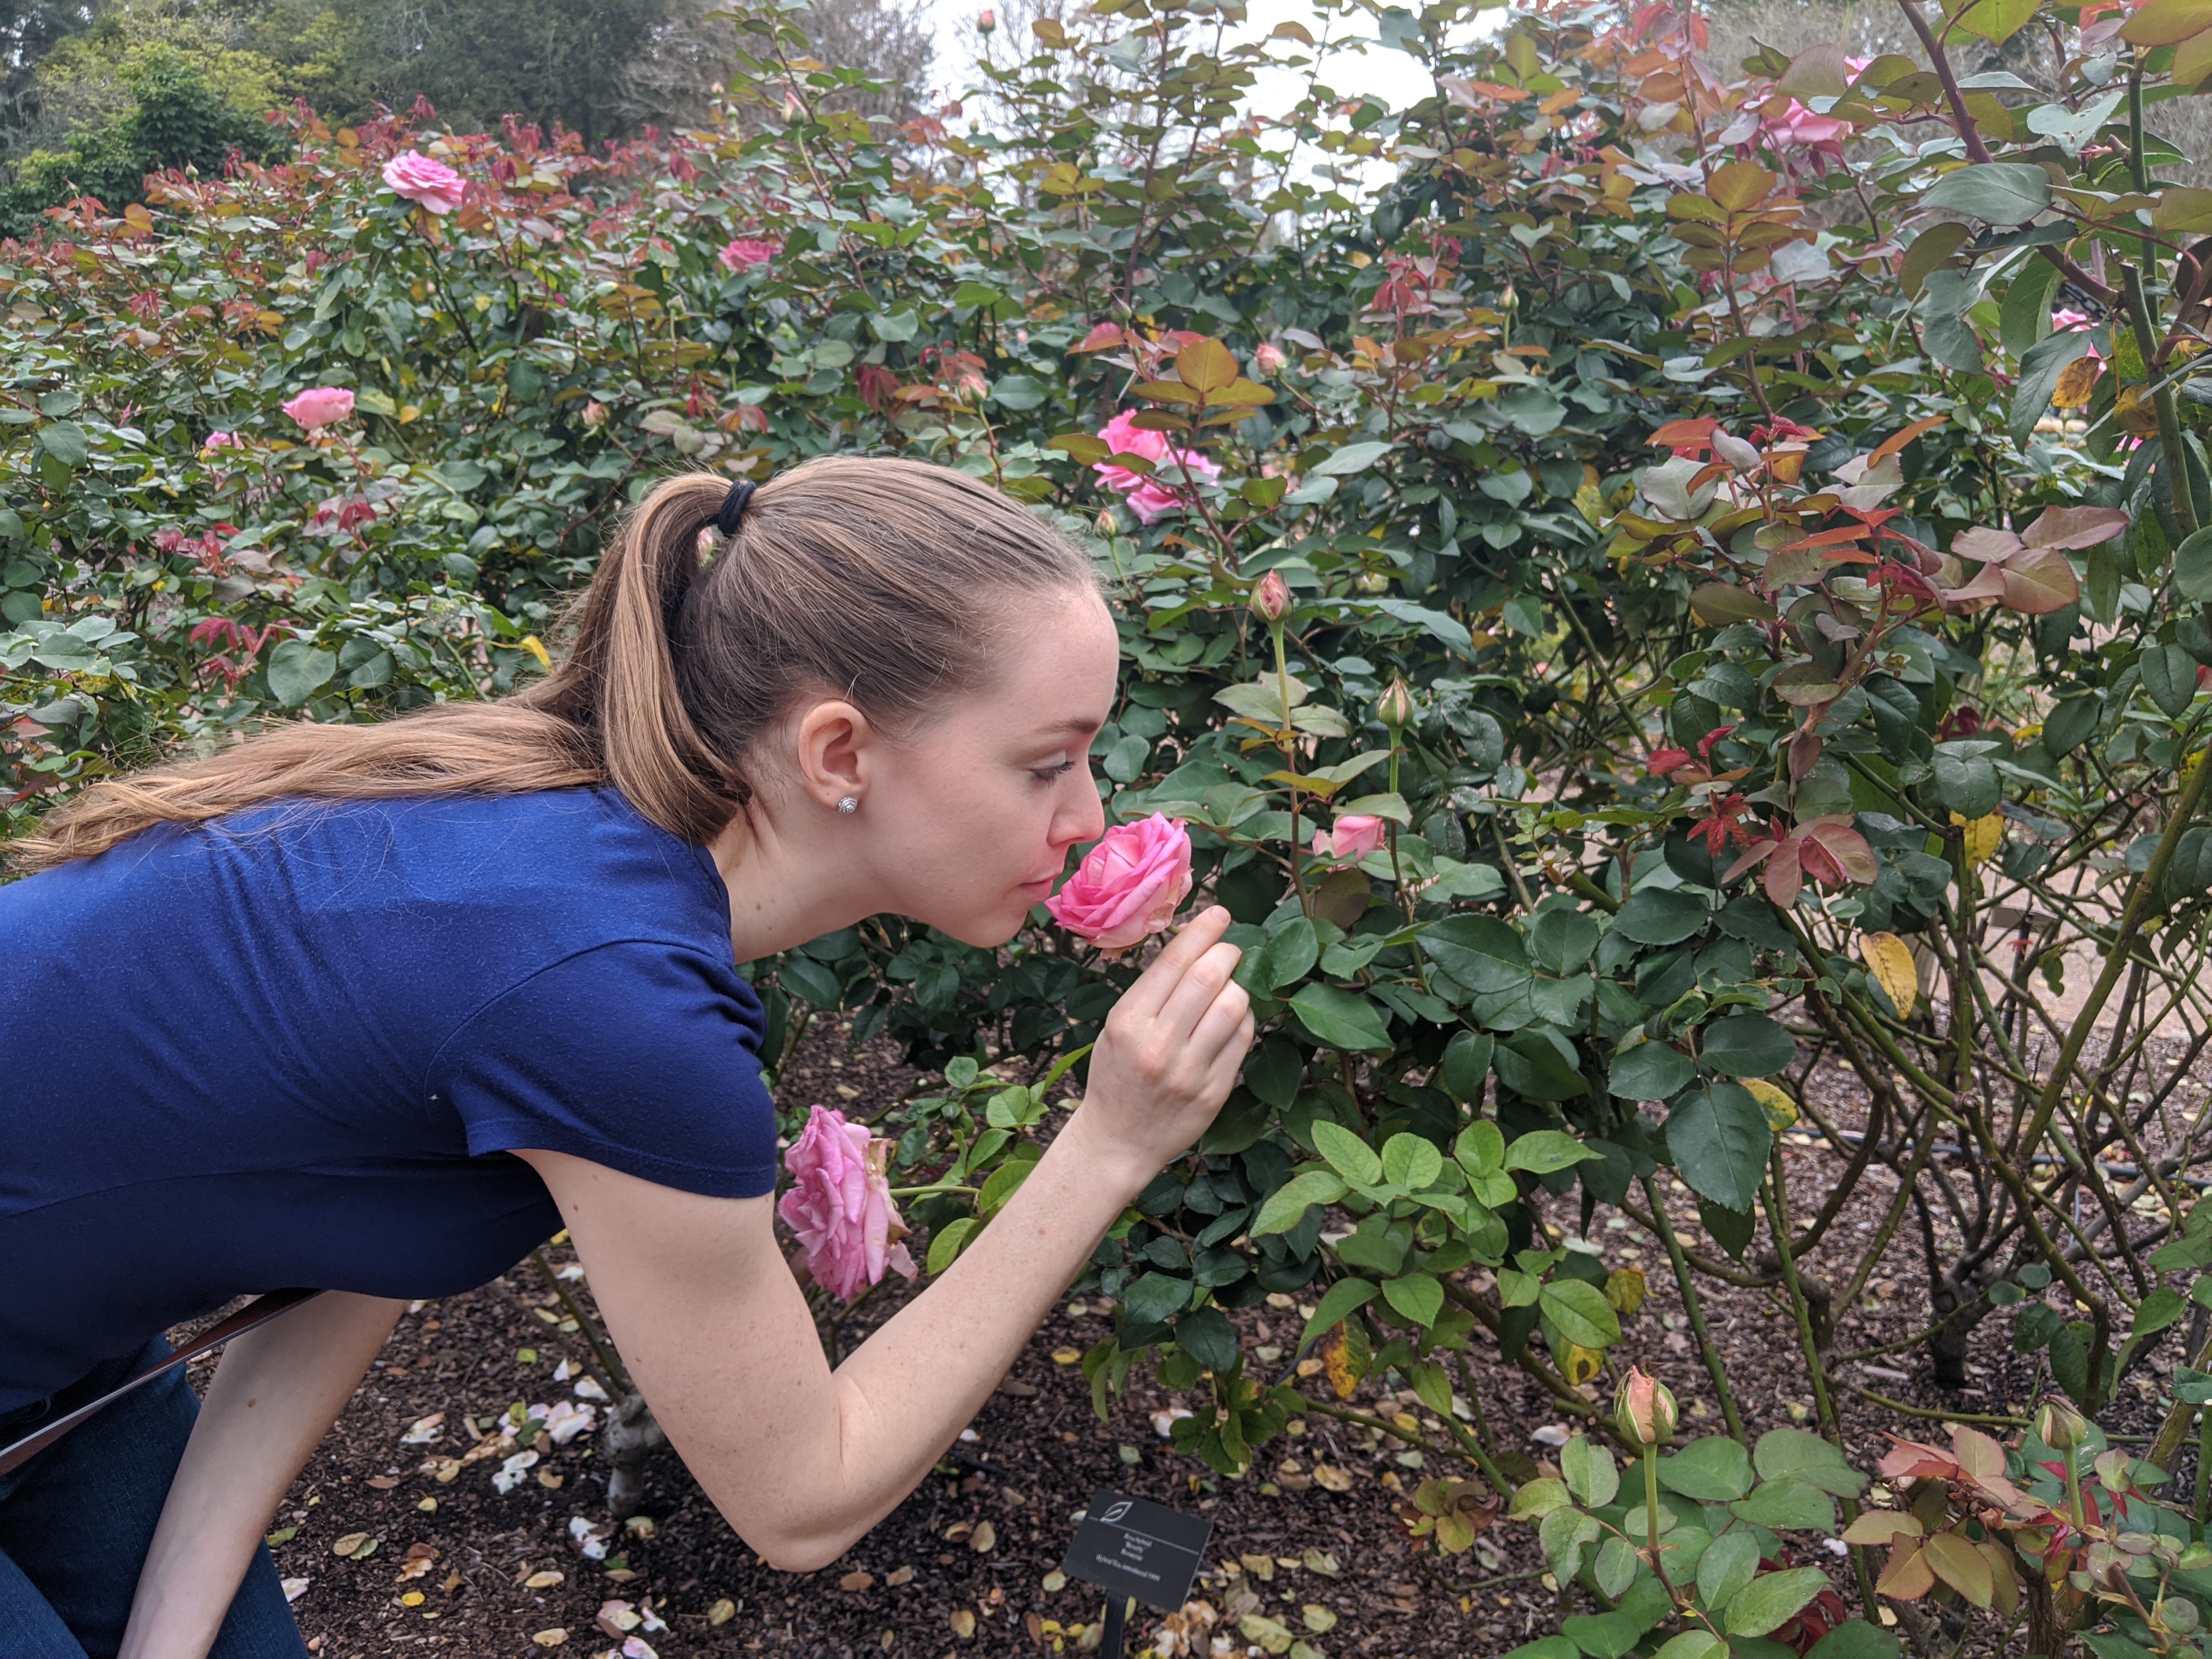 Woman smelling flowers in Leu Gardens